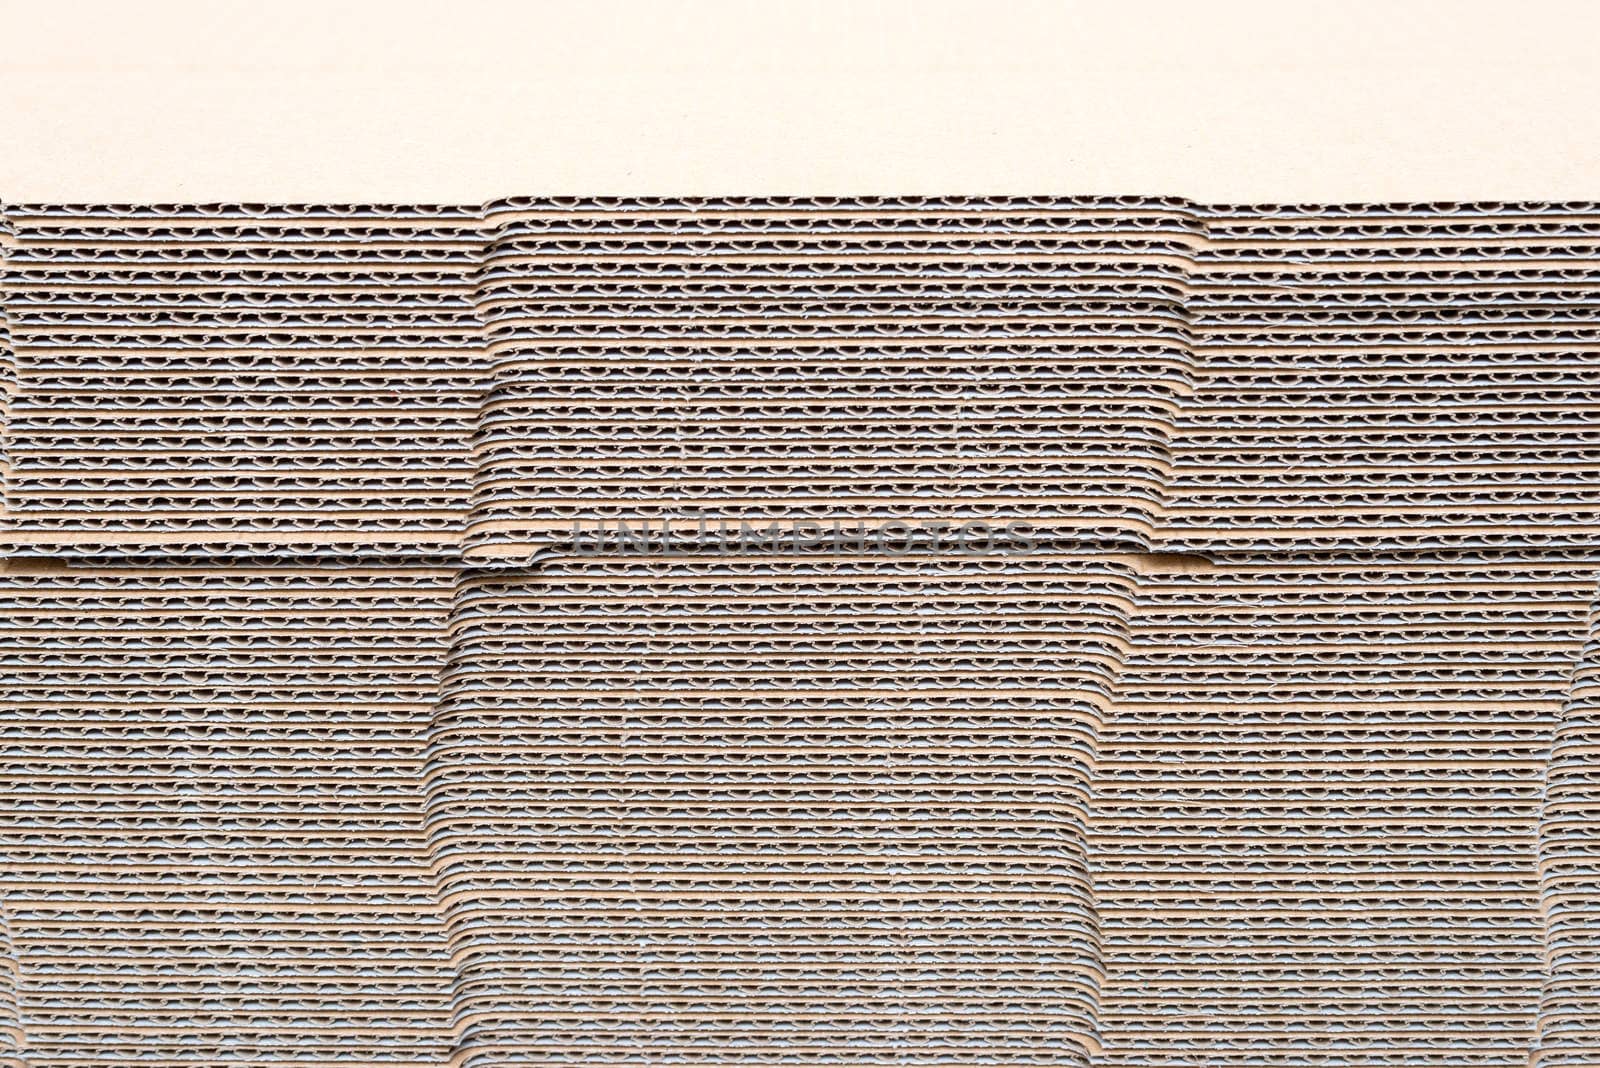 Corrugated cardboard texture by DNKSTUDIO